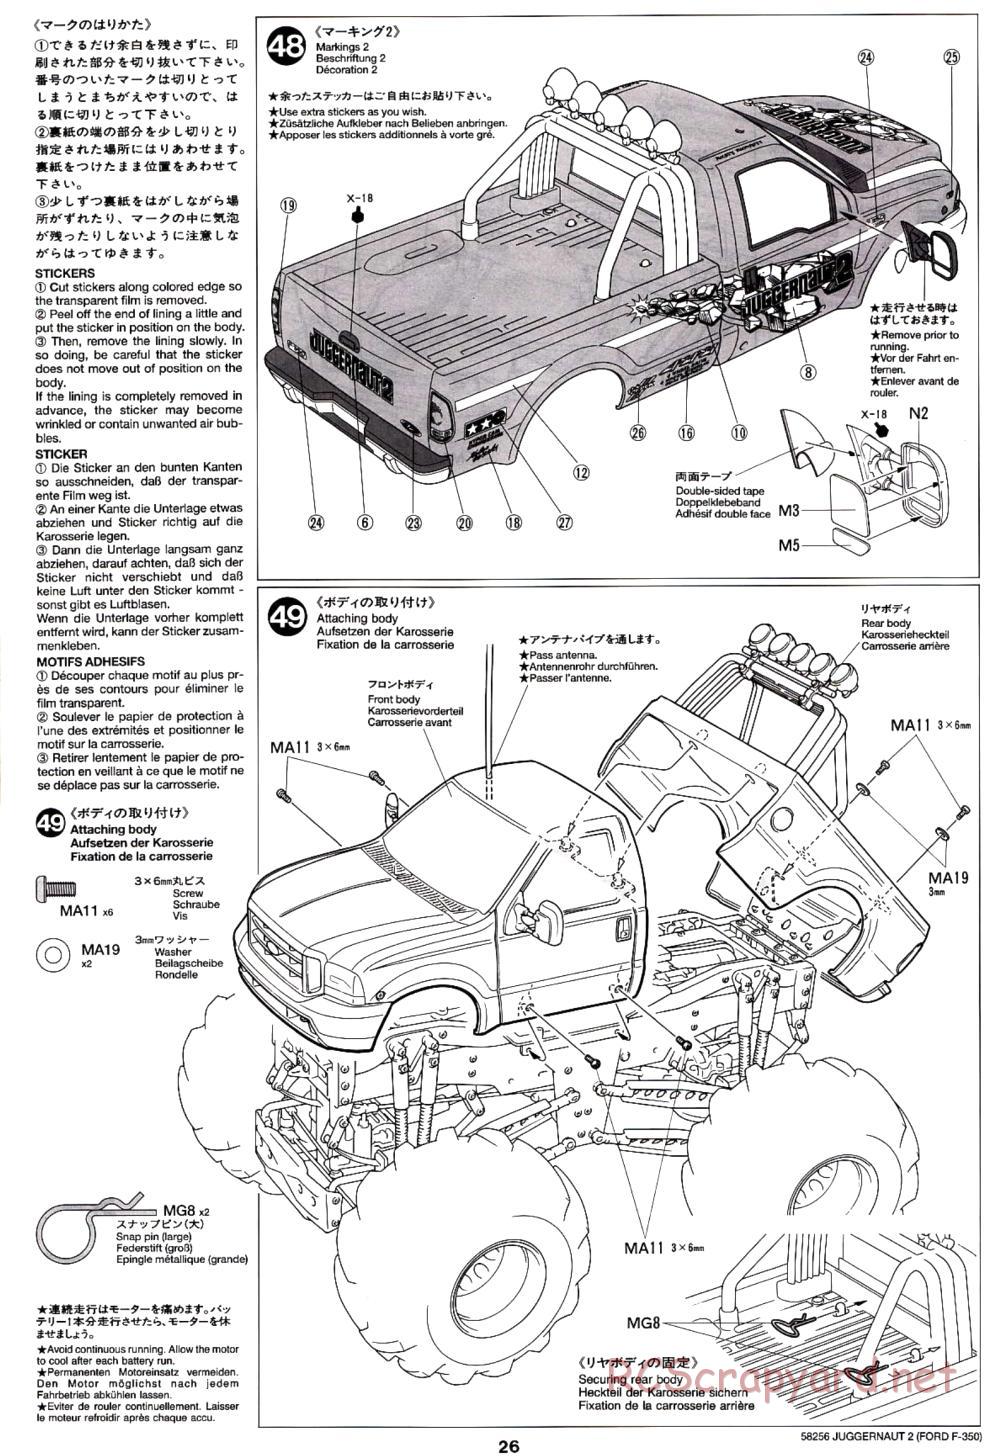 Tamiya - Juggernaut 2 Chassis - Manual - Page 26